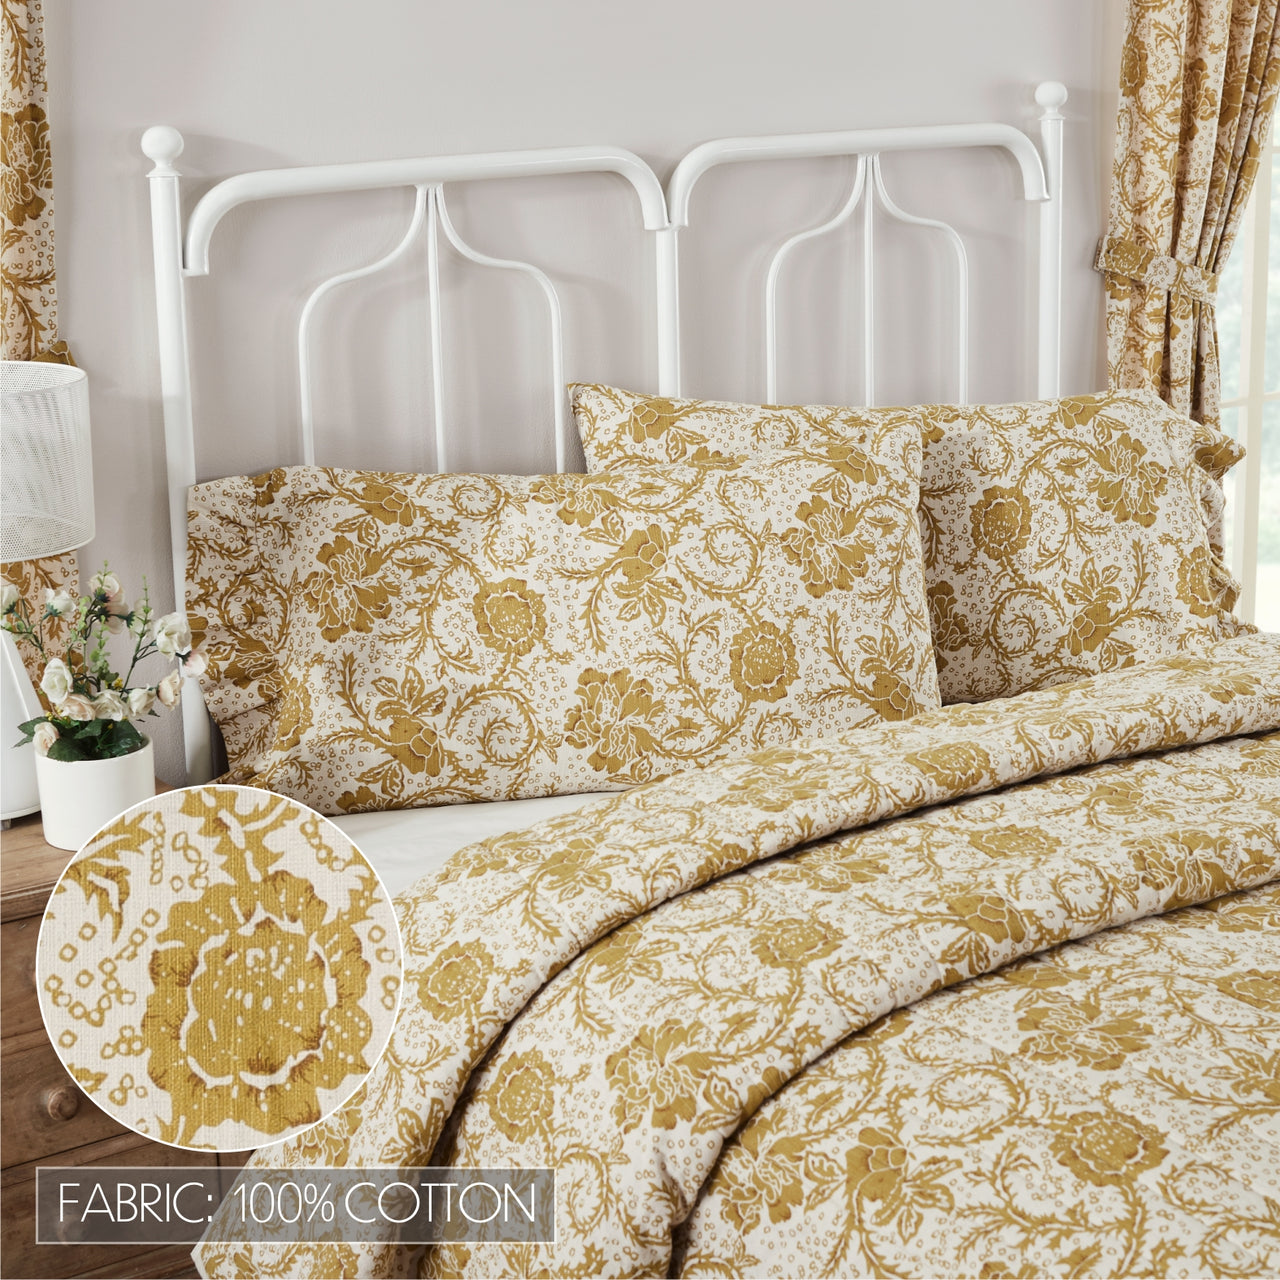 Dorset Gold Floral Ruffled King Pillow Case Set of 2 21x36+4 VHC Brands